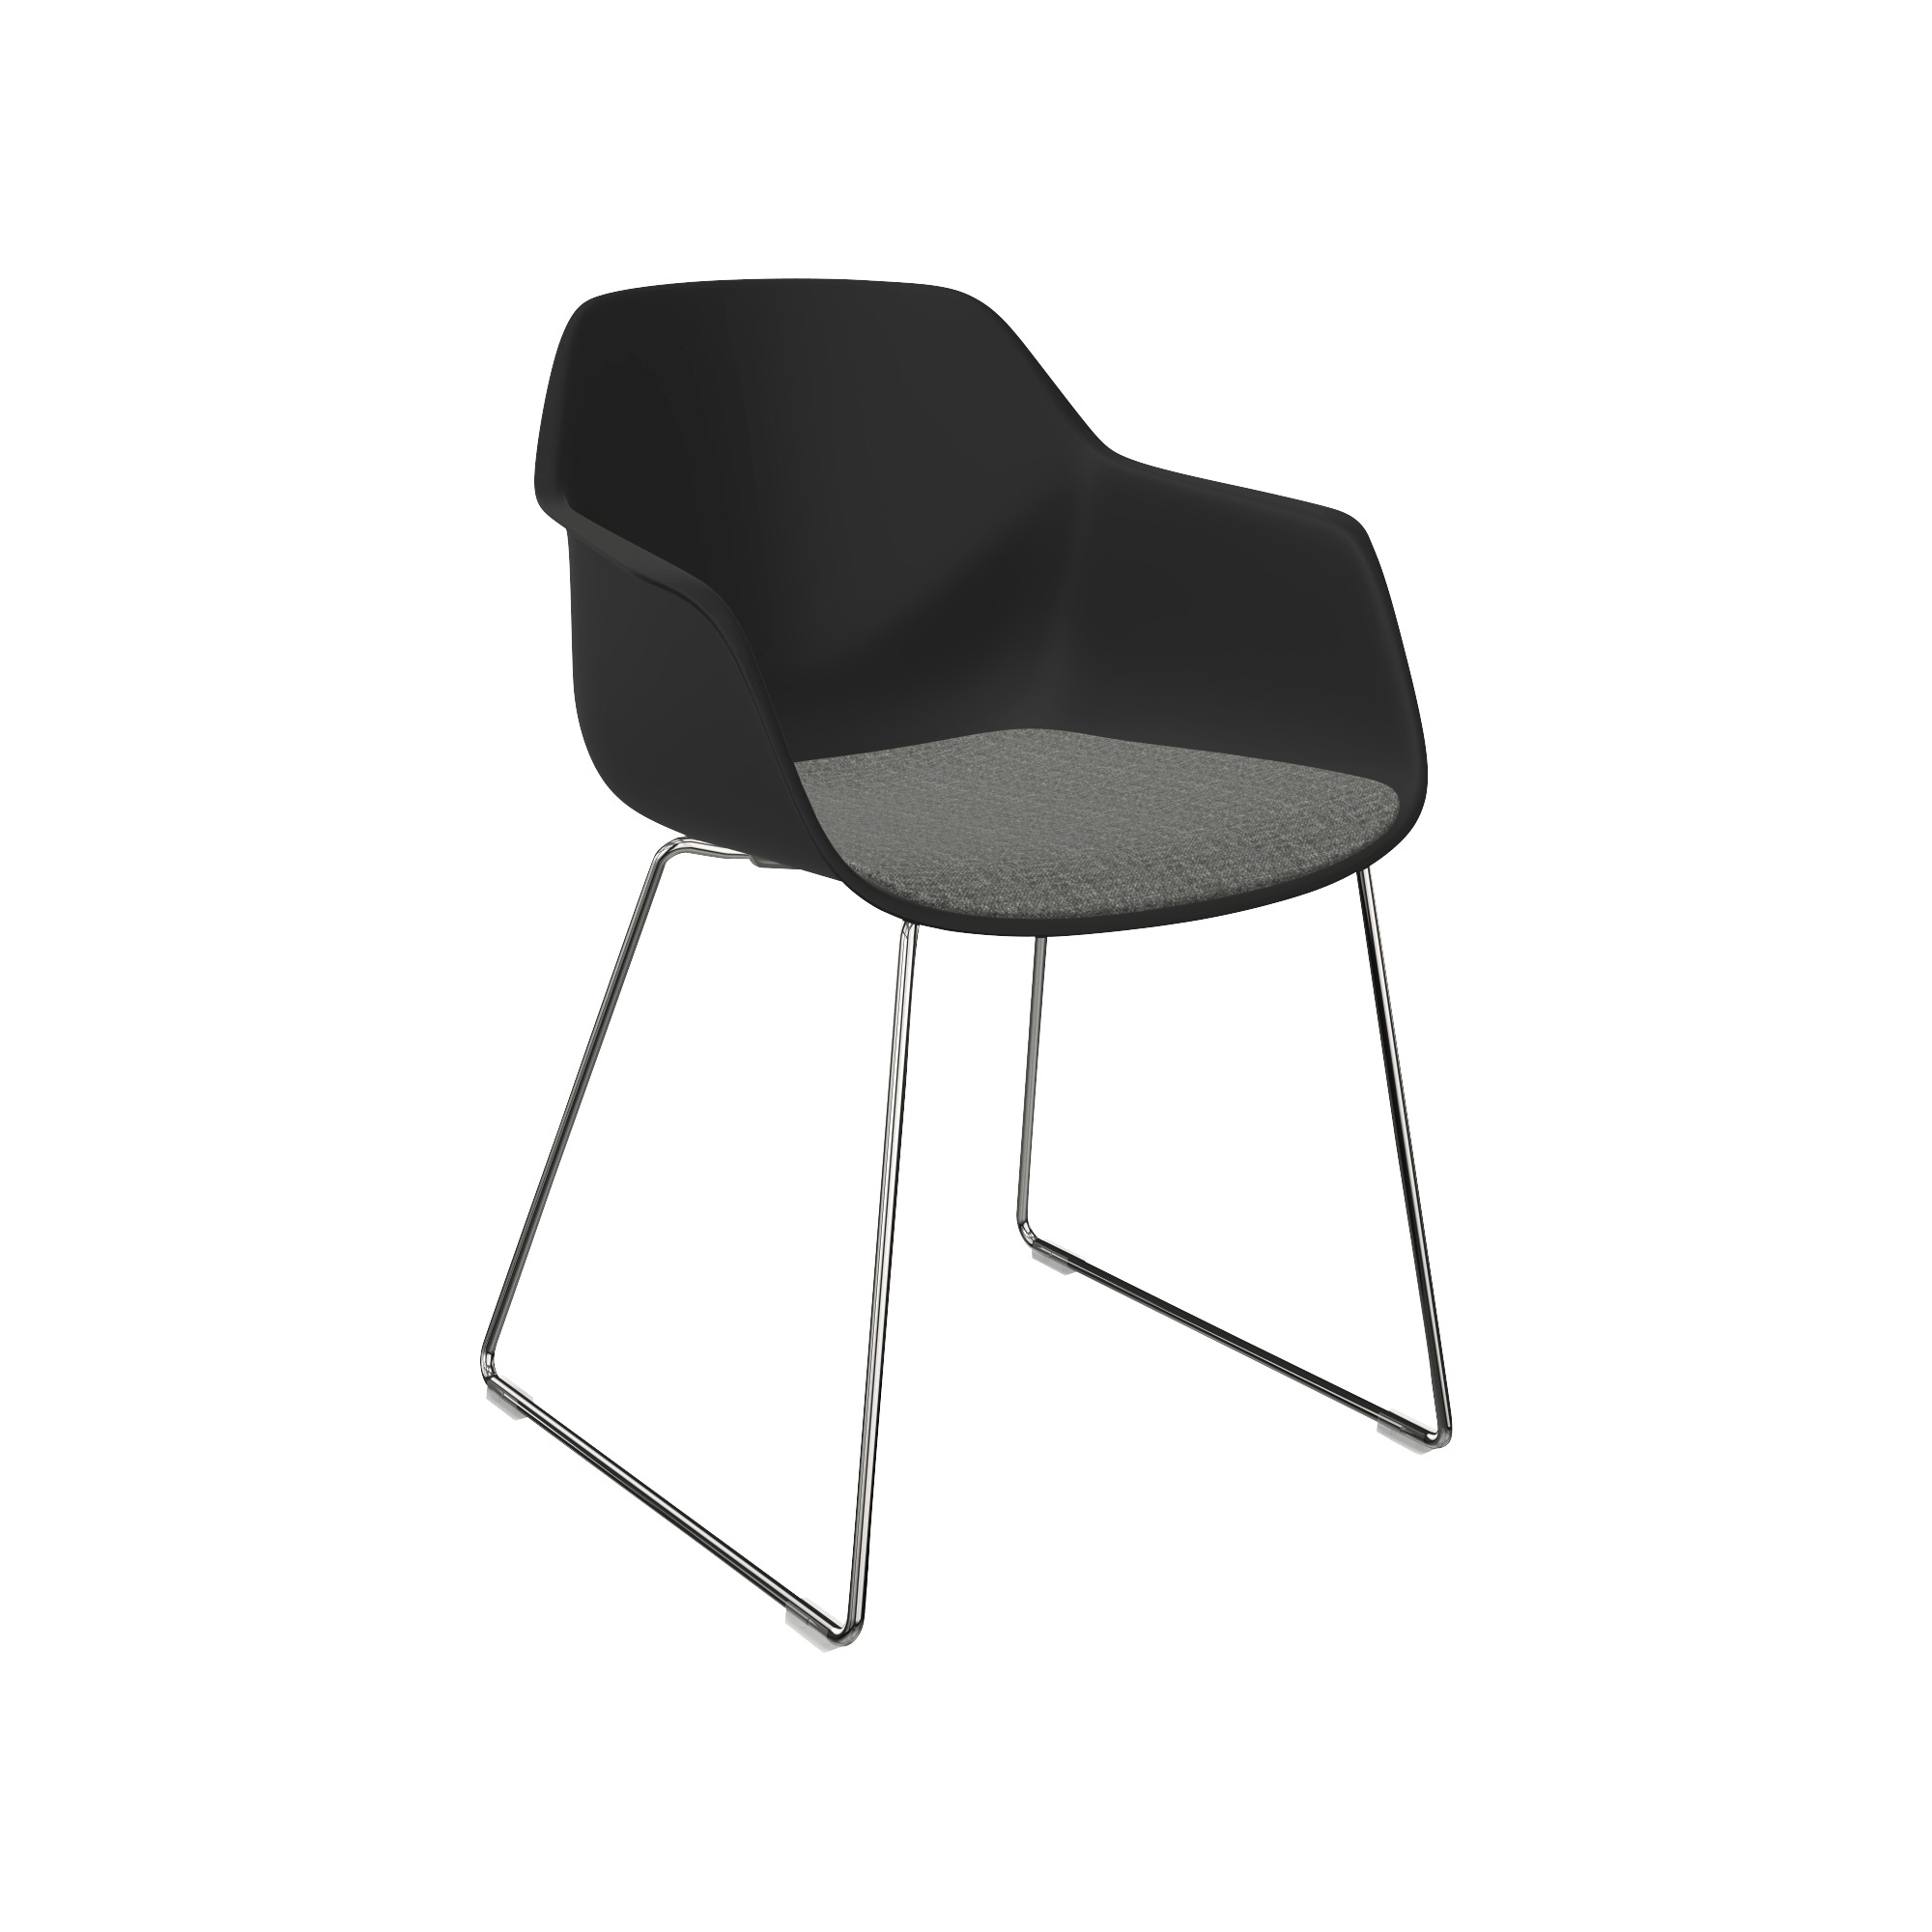 A designer desk chair